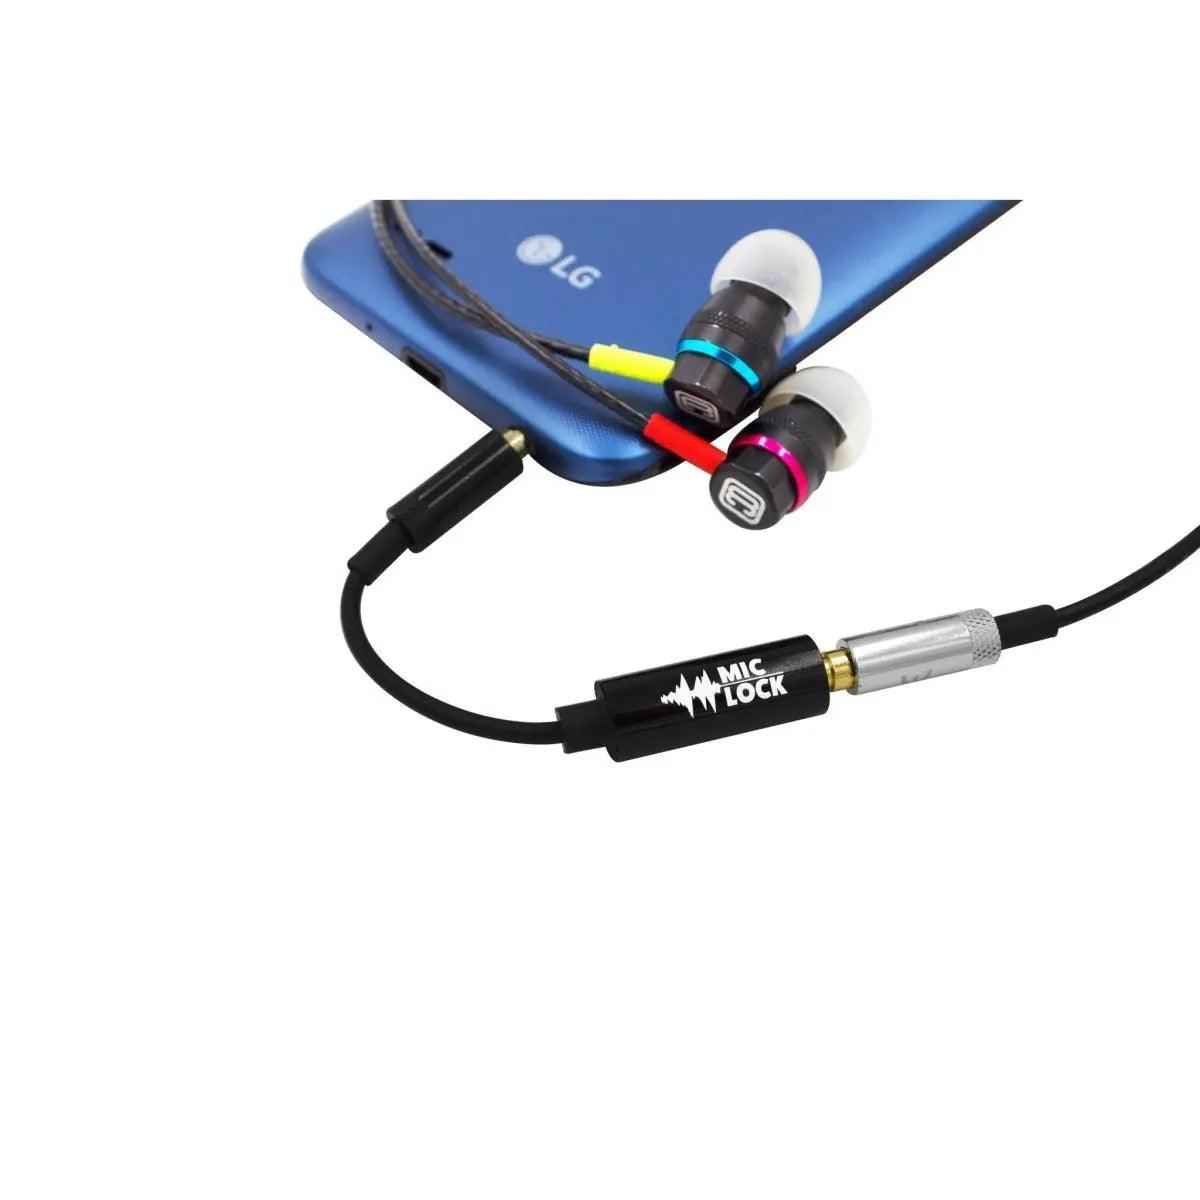 Mic-Lock 3.5mm Soundpass Microphone Blocker- Black - Mic-Lock